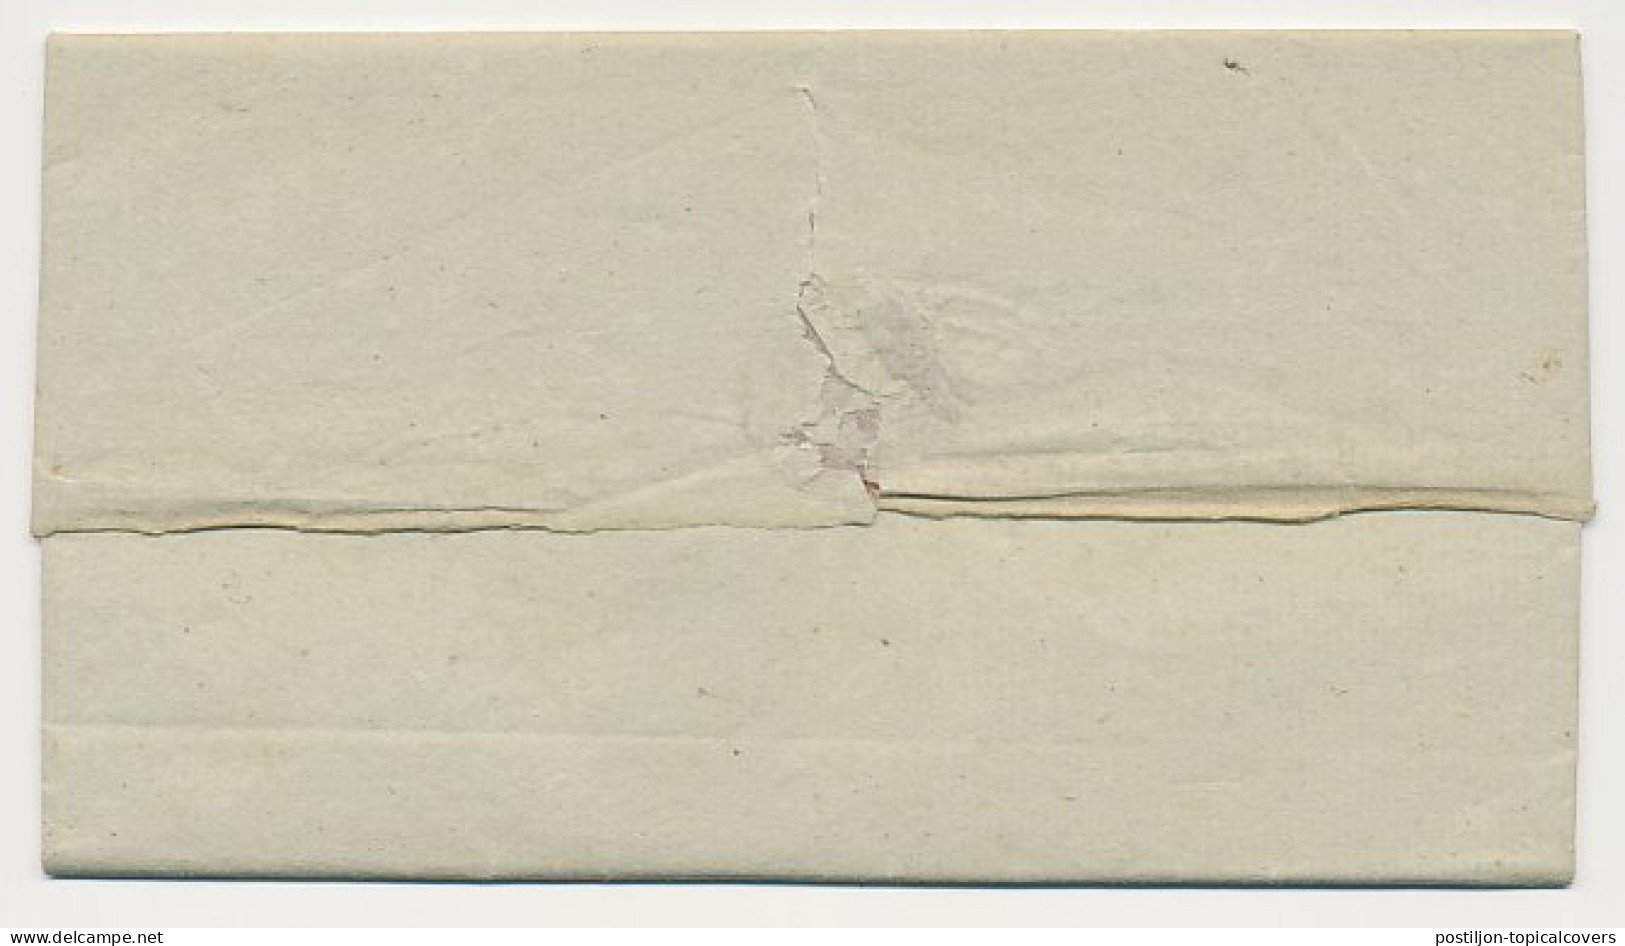 Nymegen - Ewijk 1830 - ...-1852 Préphilatélie